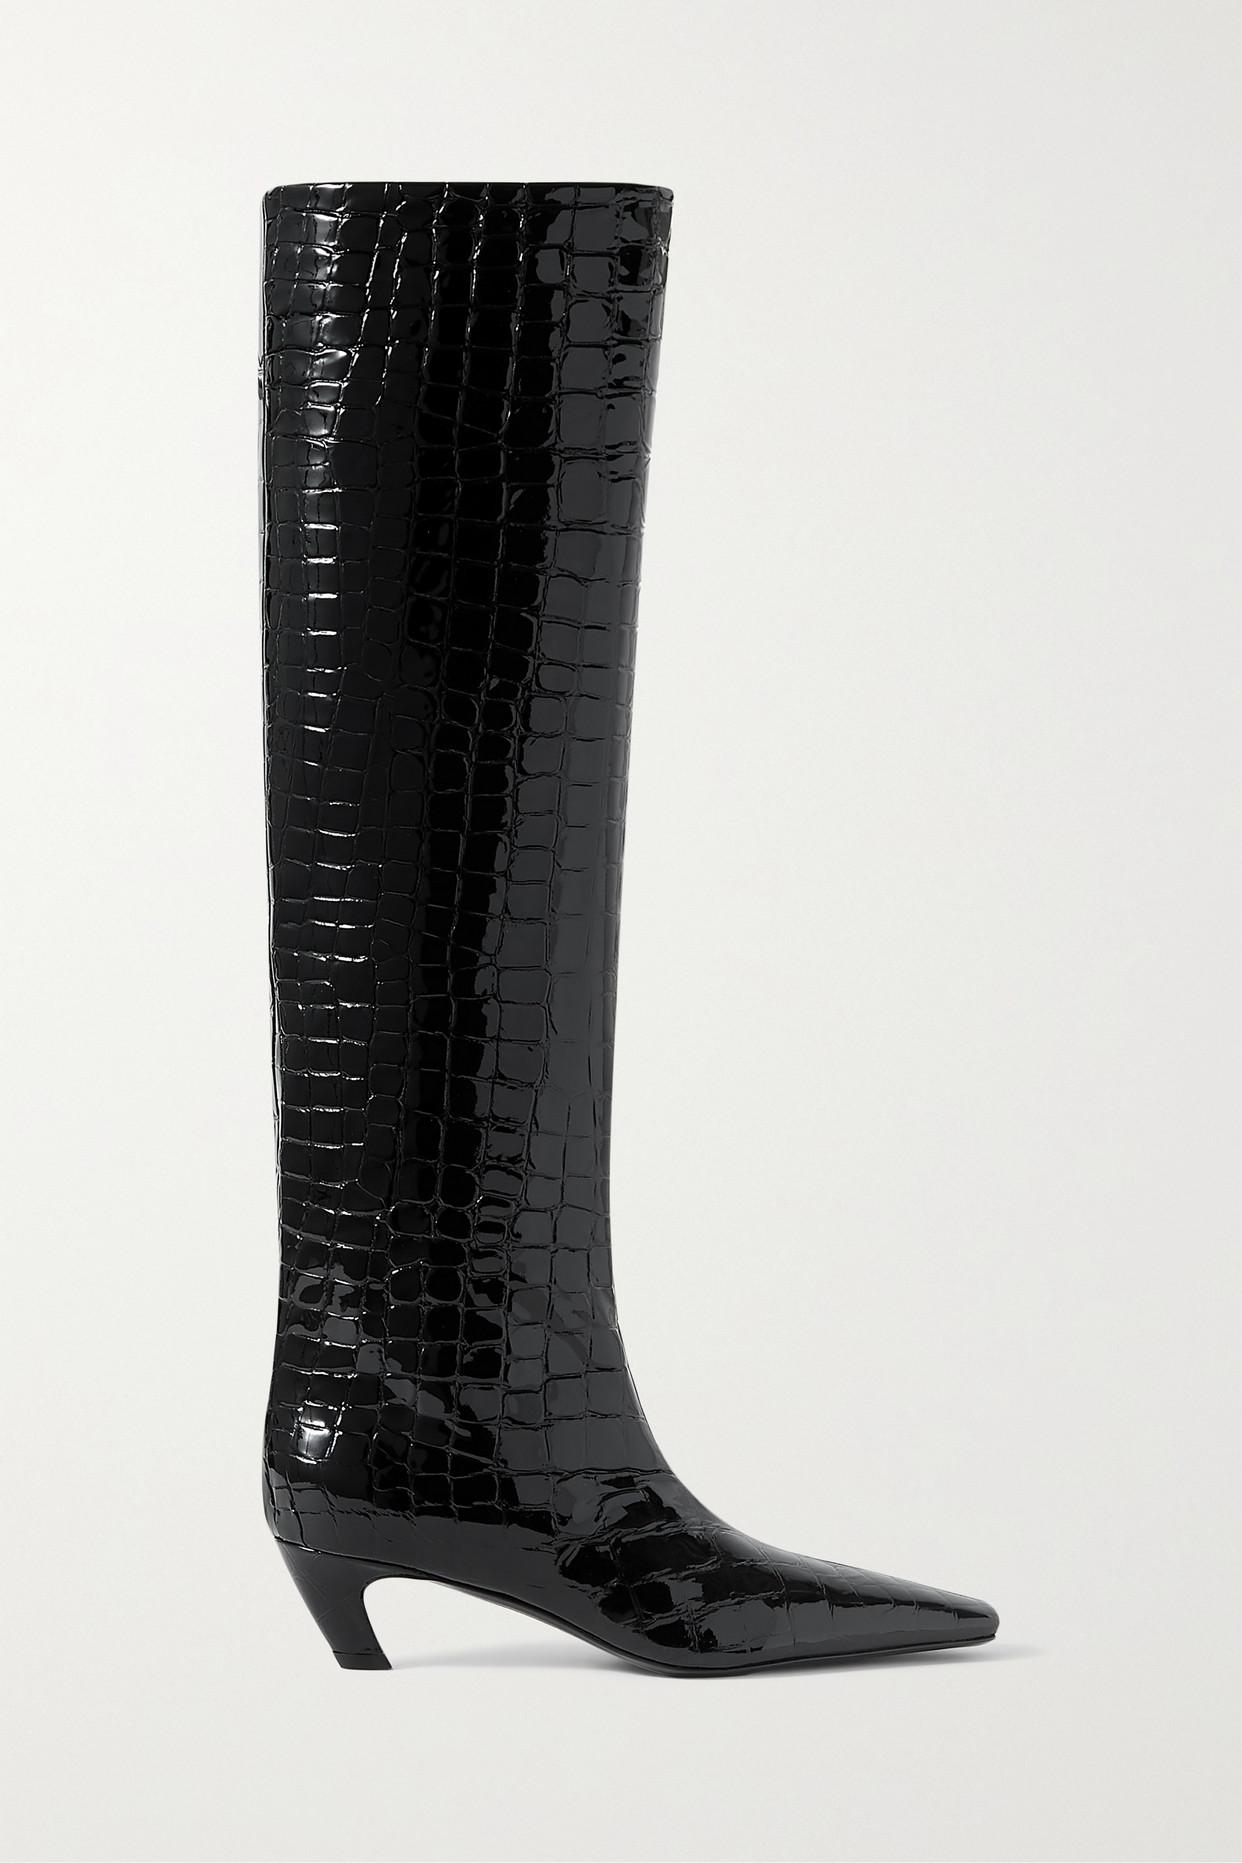 Khaite Davis Croc-effect Leather Knee-high Boots in Black | Lyst